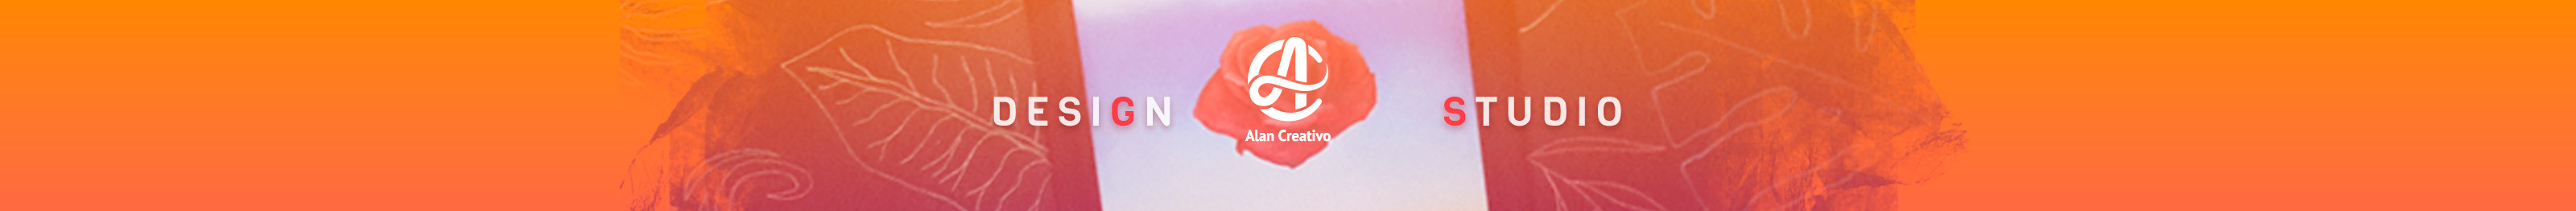 Alan (Daniel Only)'s profile banner